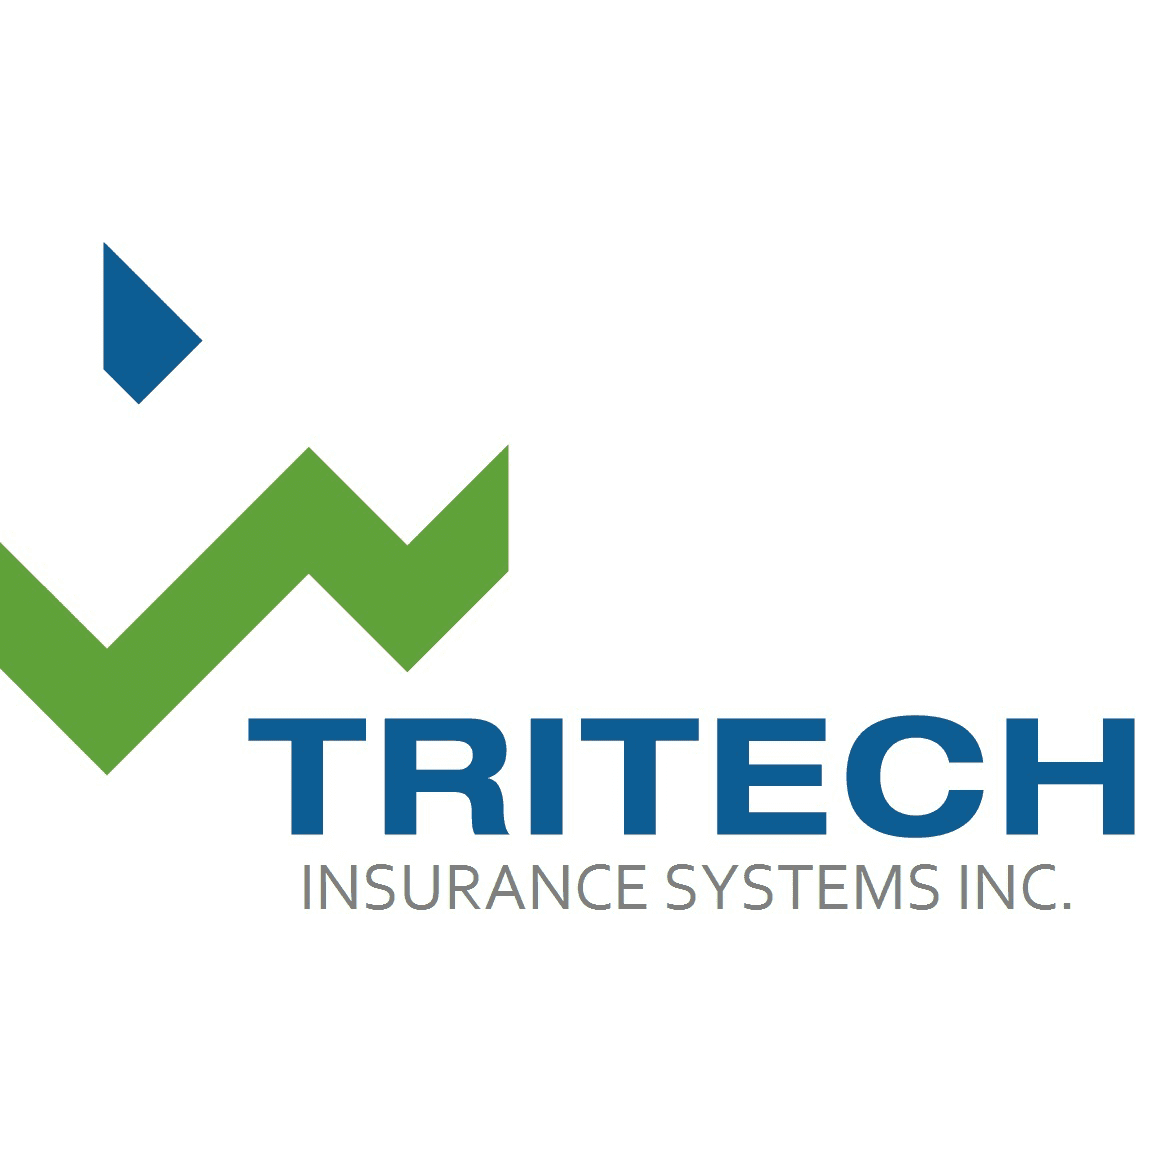 Tritech Insurance Systems